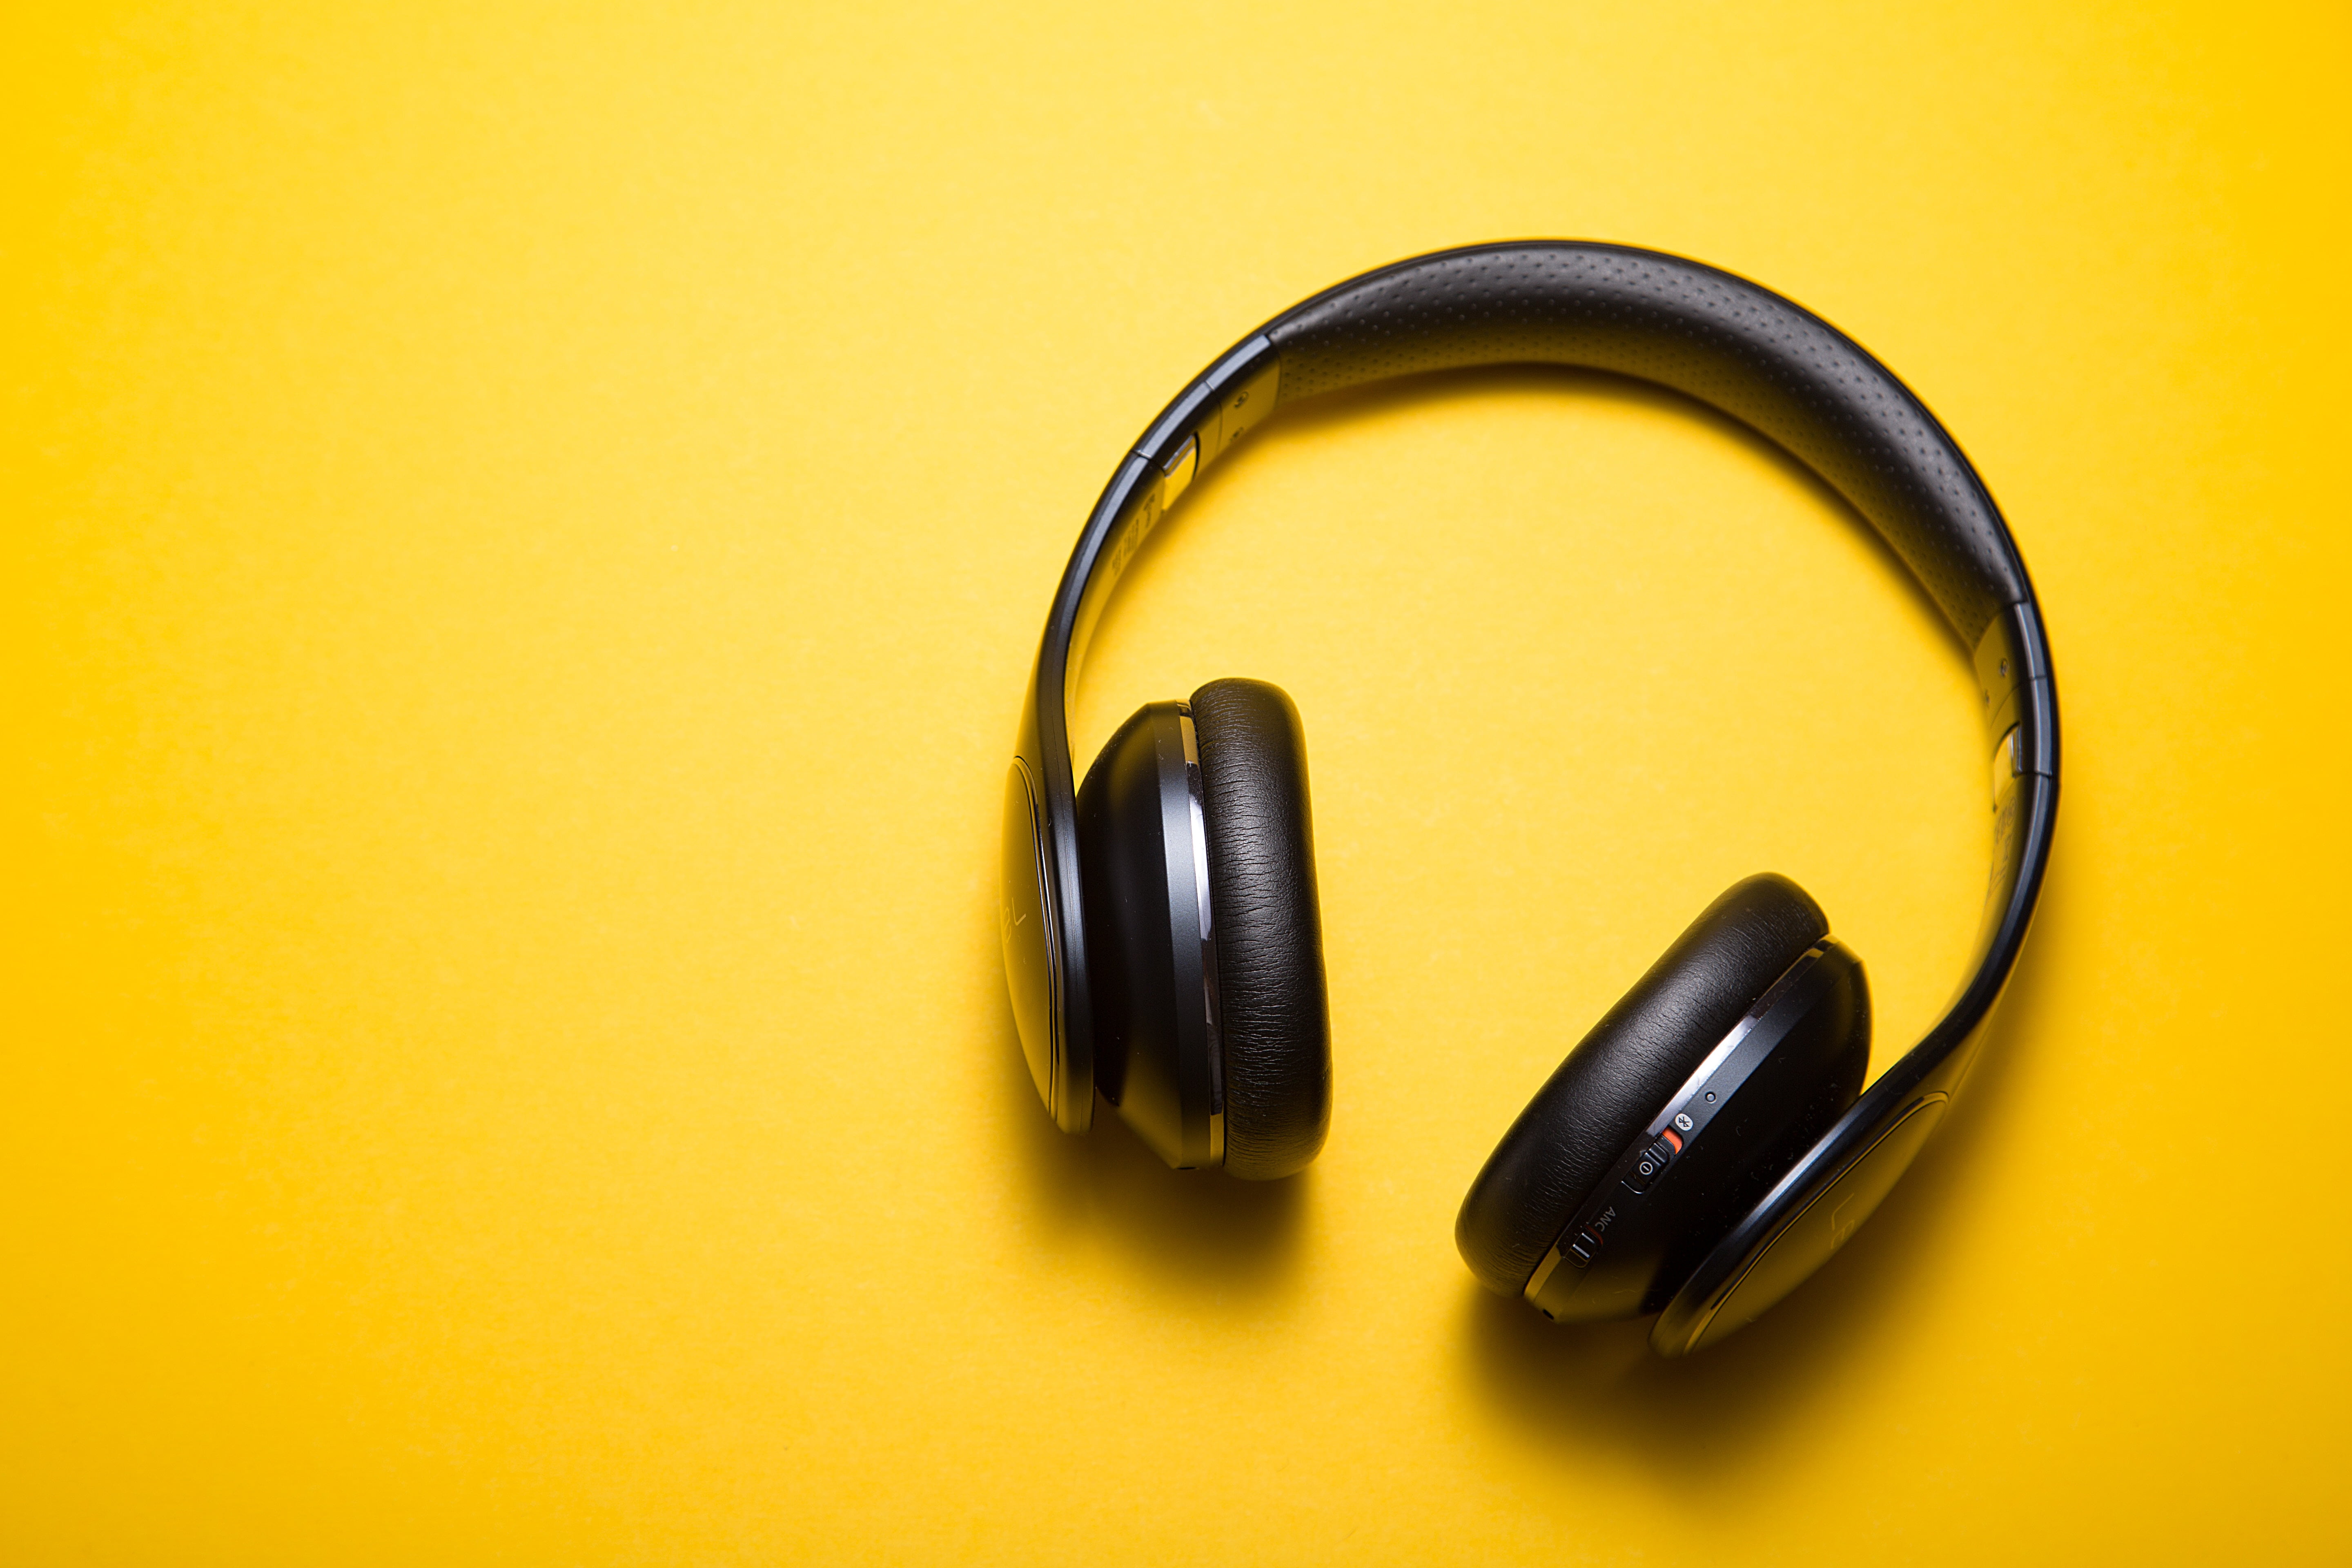 Black wireless headphones, Headphones, Yellow background